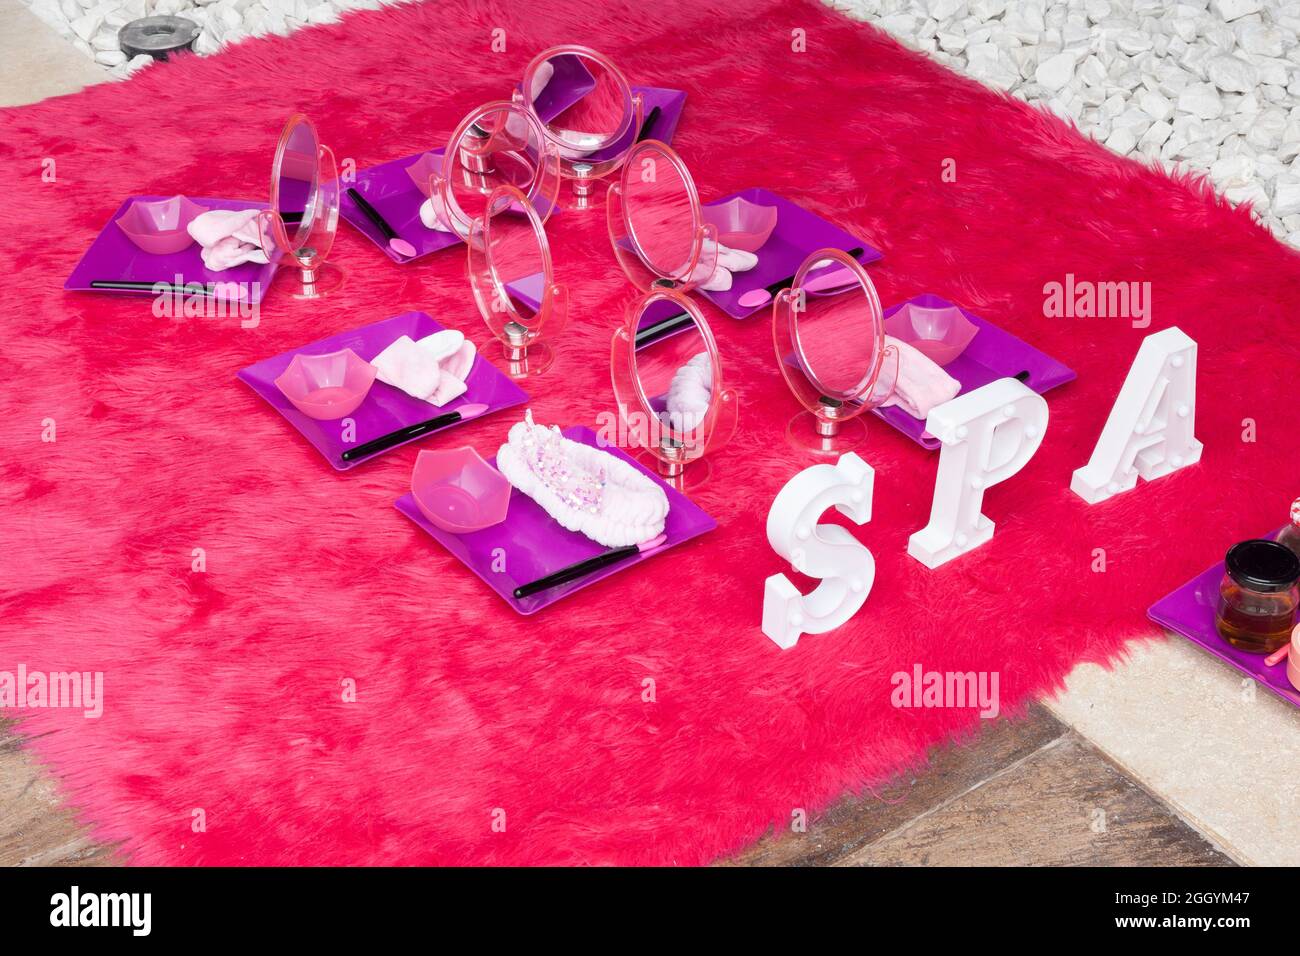 Fiesta de spa para chicas fotografías e imágenes de alta resolución - Alamy